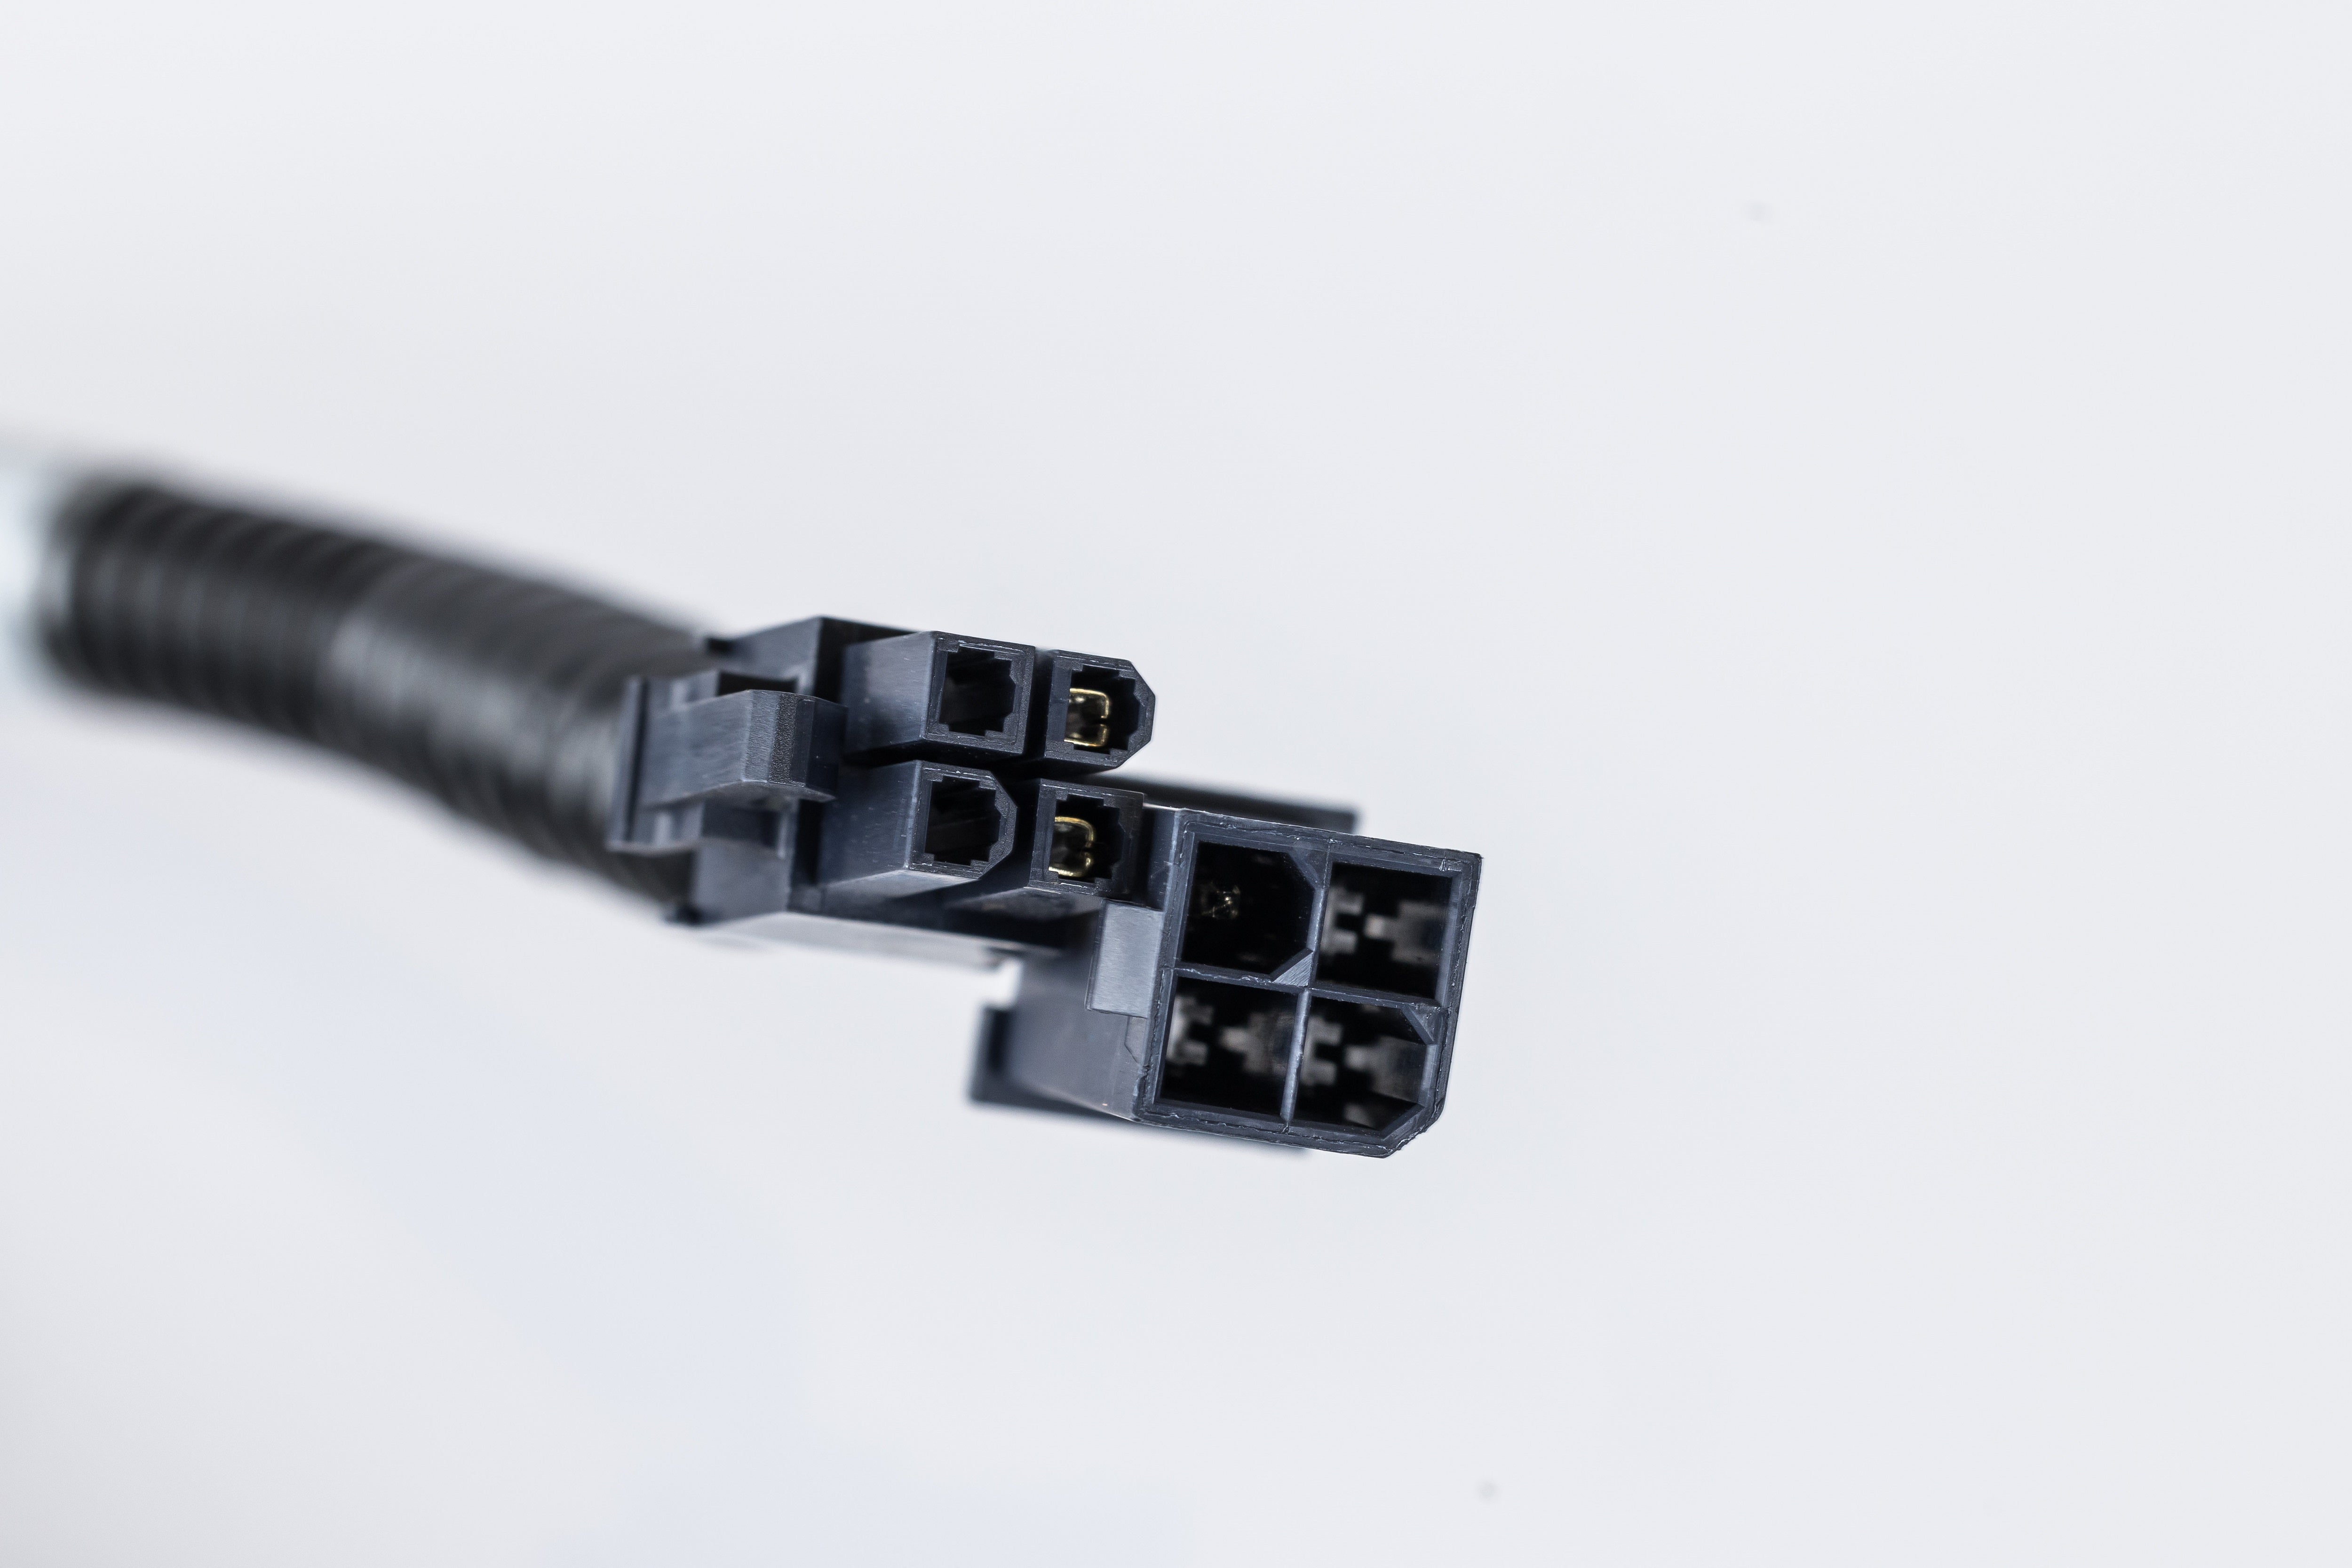 Webasto Wiring Harness Adapter For Smartemp 3.0 Ttevo Tp50 5013932A Heater Part